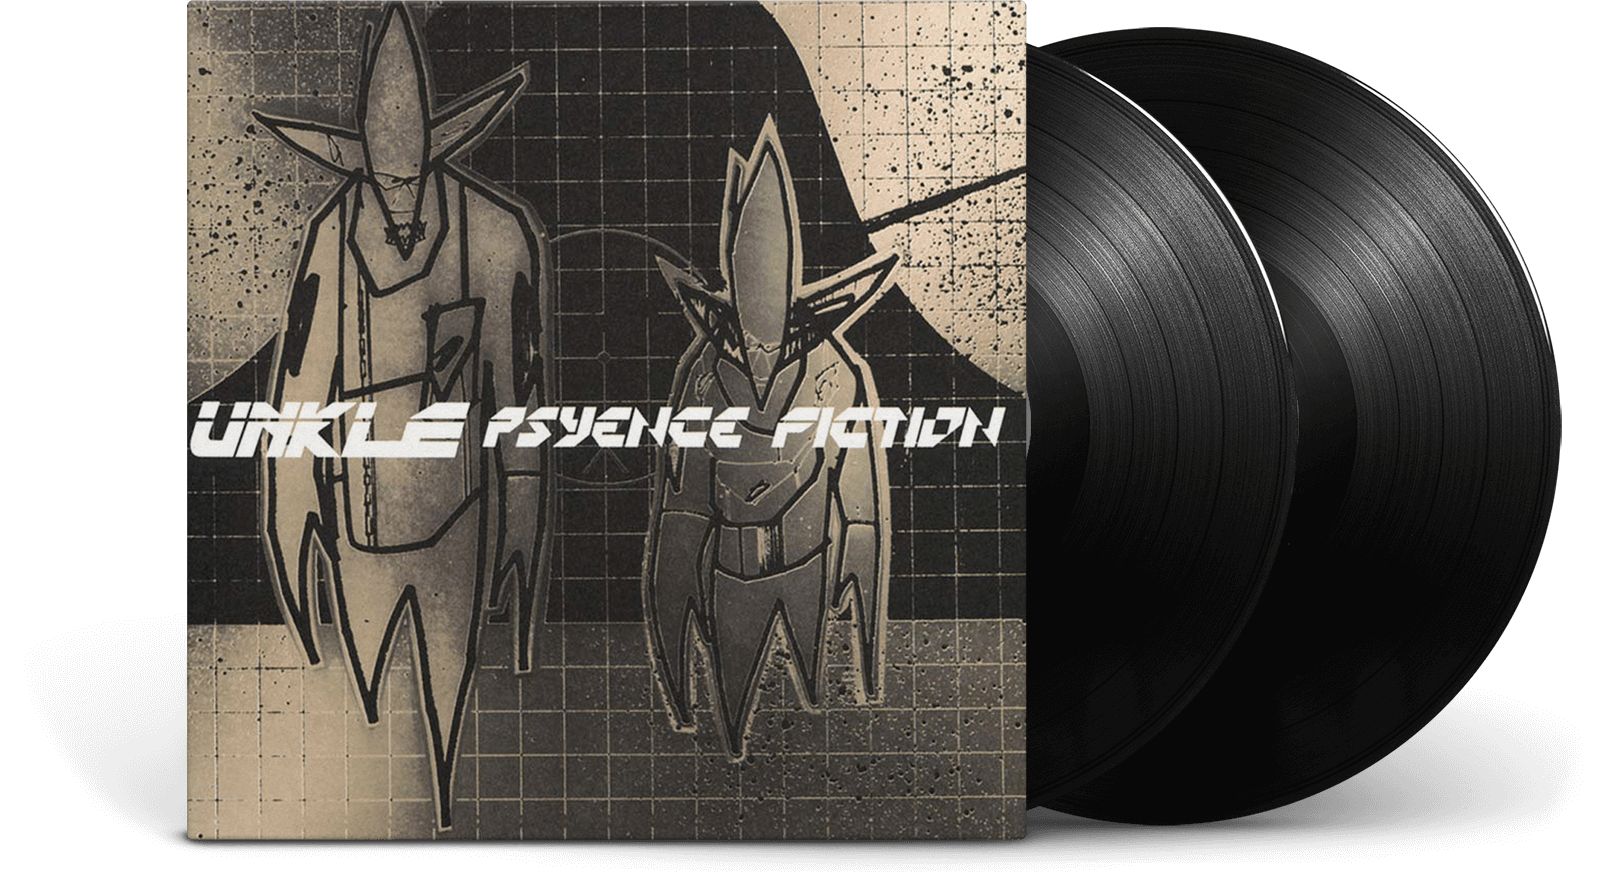 U.N.K.L.E Psyence Fiction Cassette Tape | www.causus.be